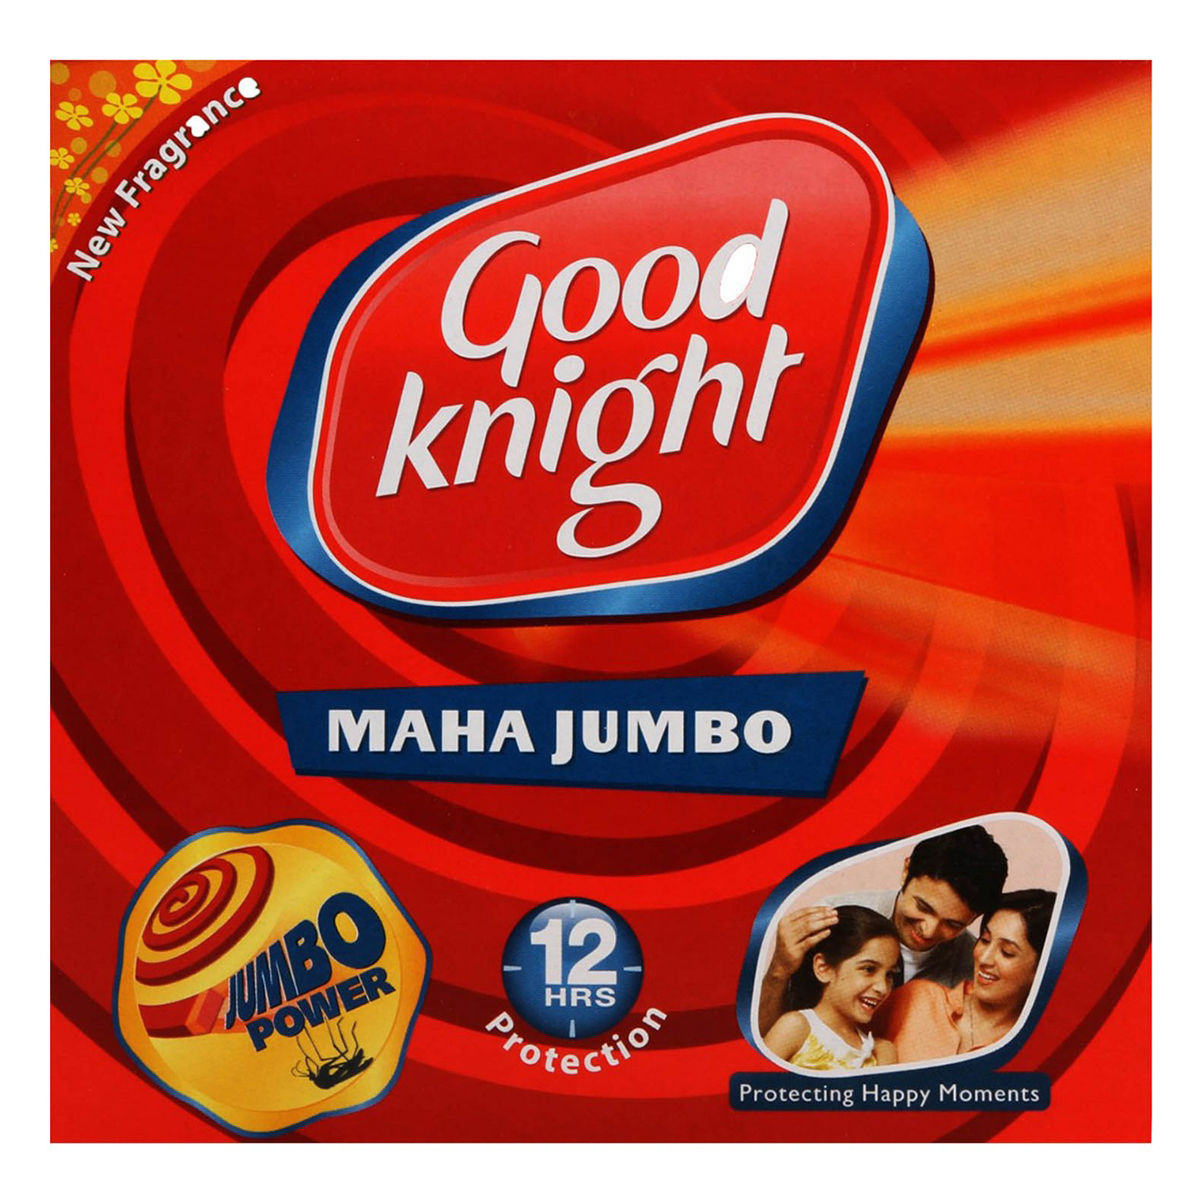 Buy Good Knight Maha Jumbo Coil, 1 Count Online